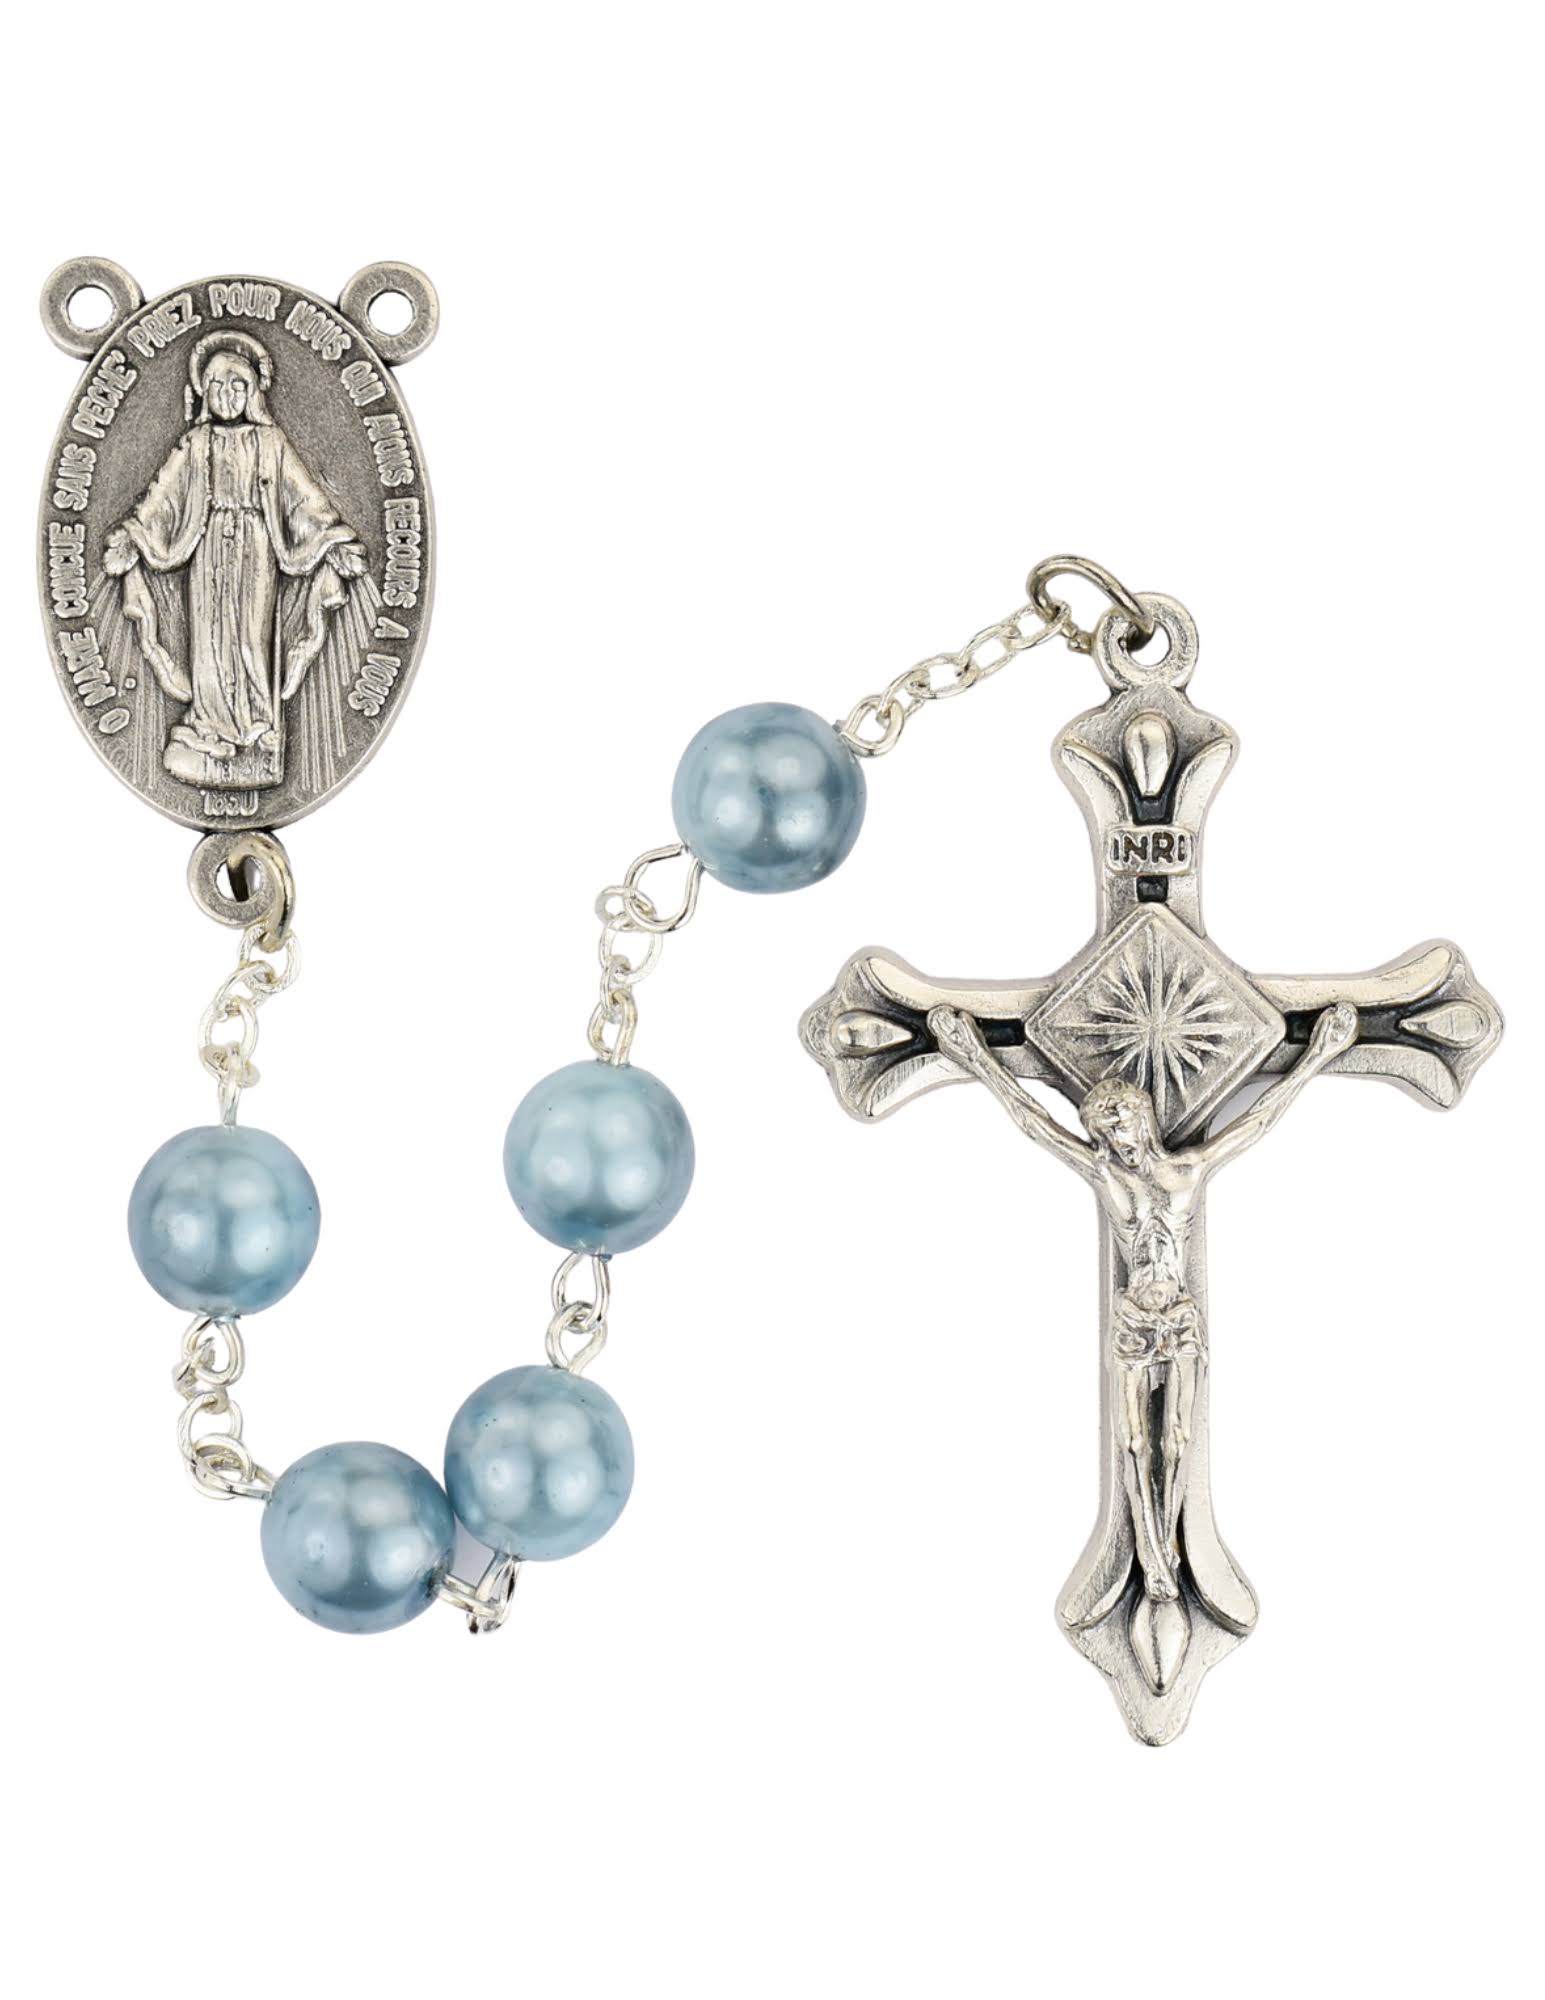 6mm Blue Swirl Pearl Rosary